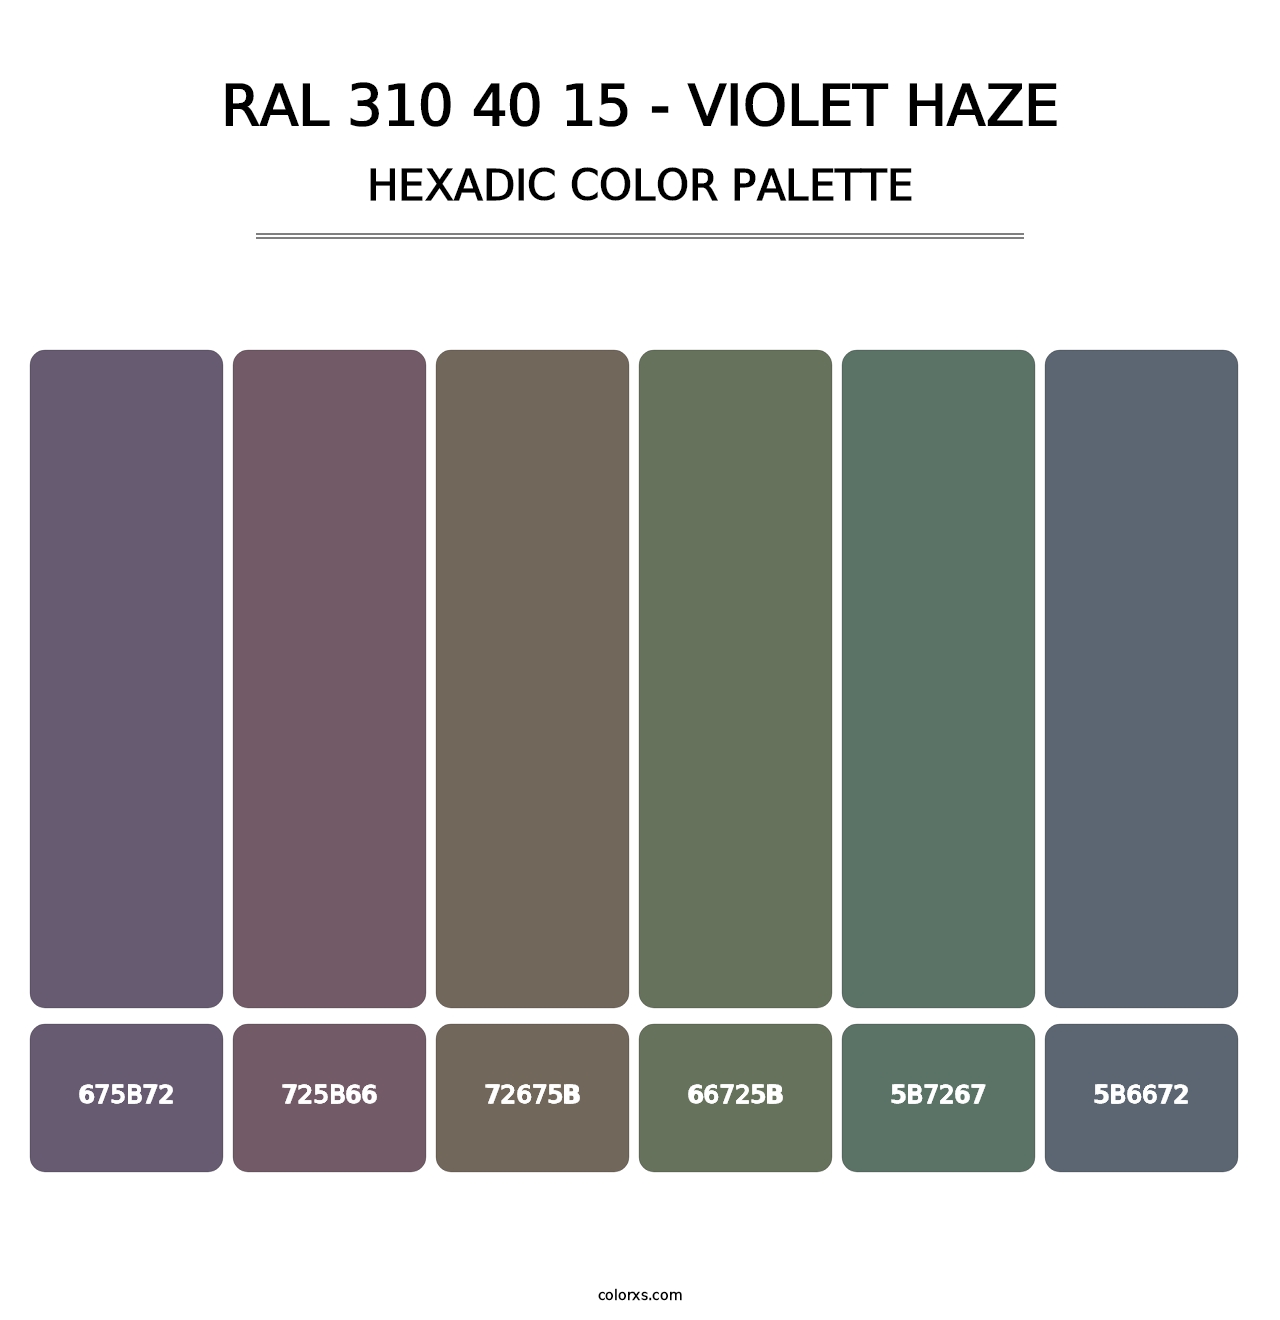 RAL 310 40 15 - Violet Haze - Hexadic Color Palette